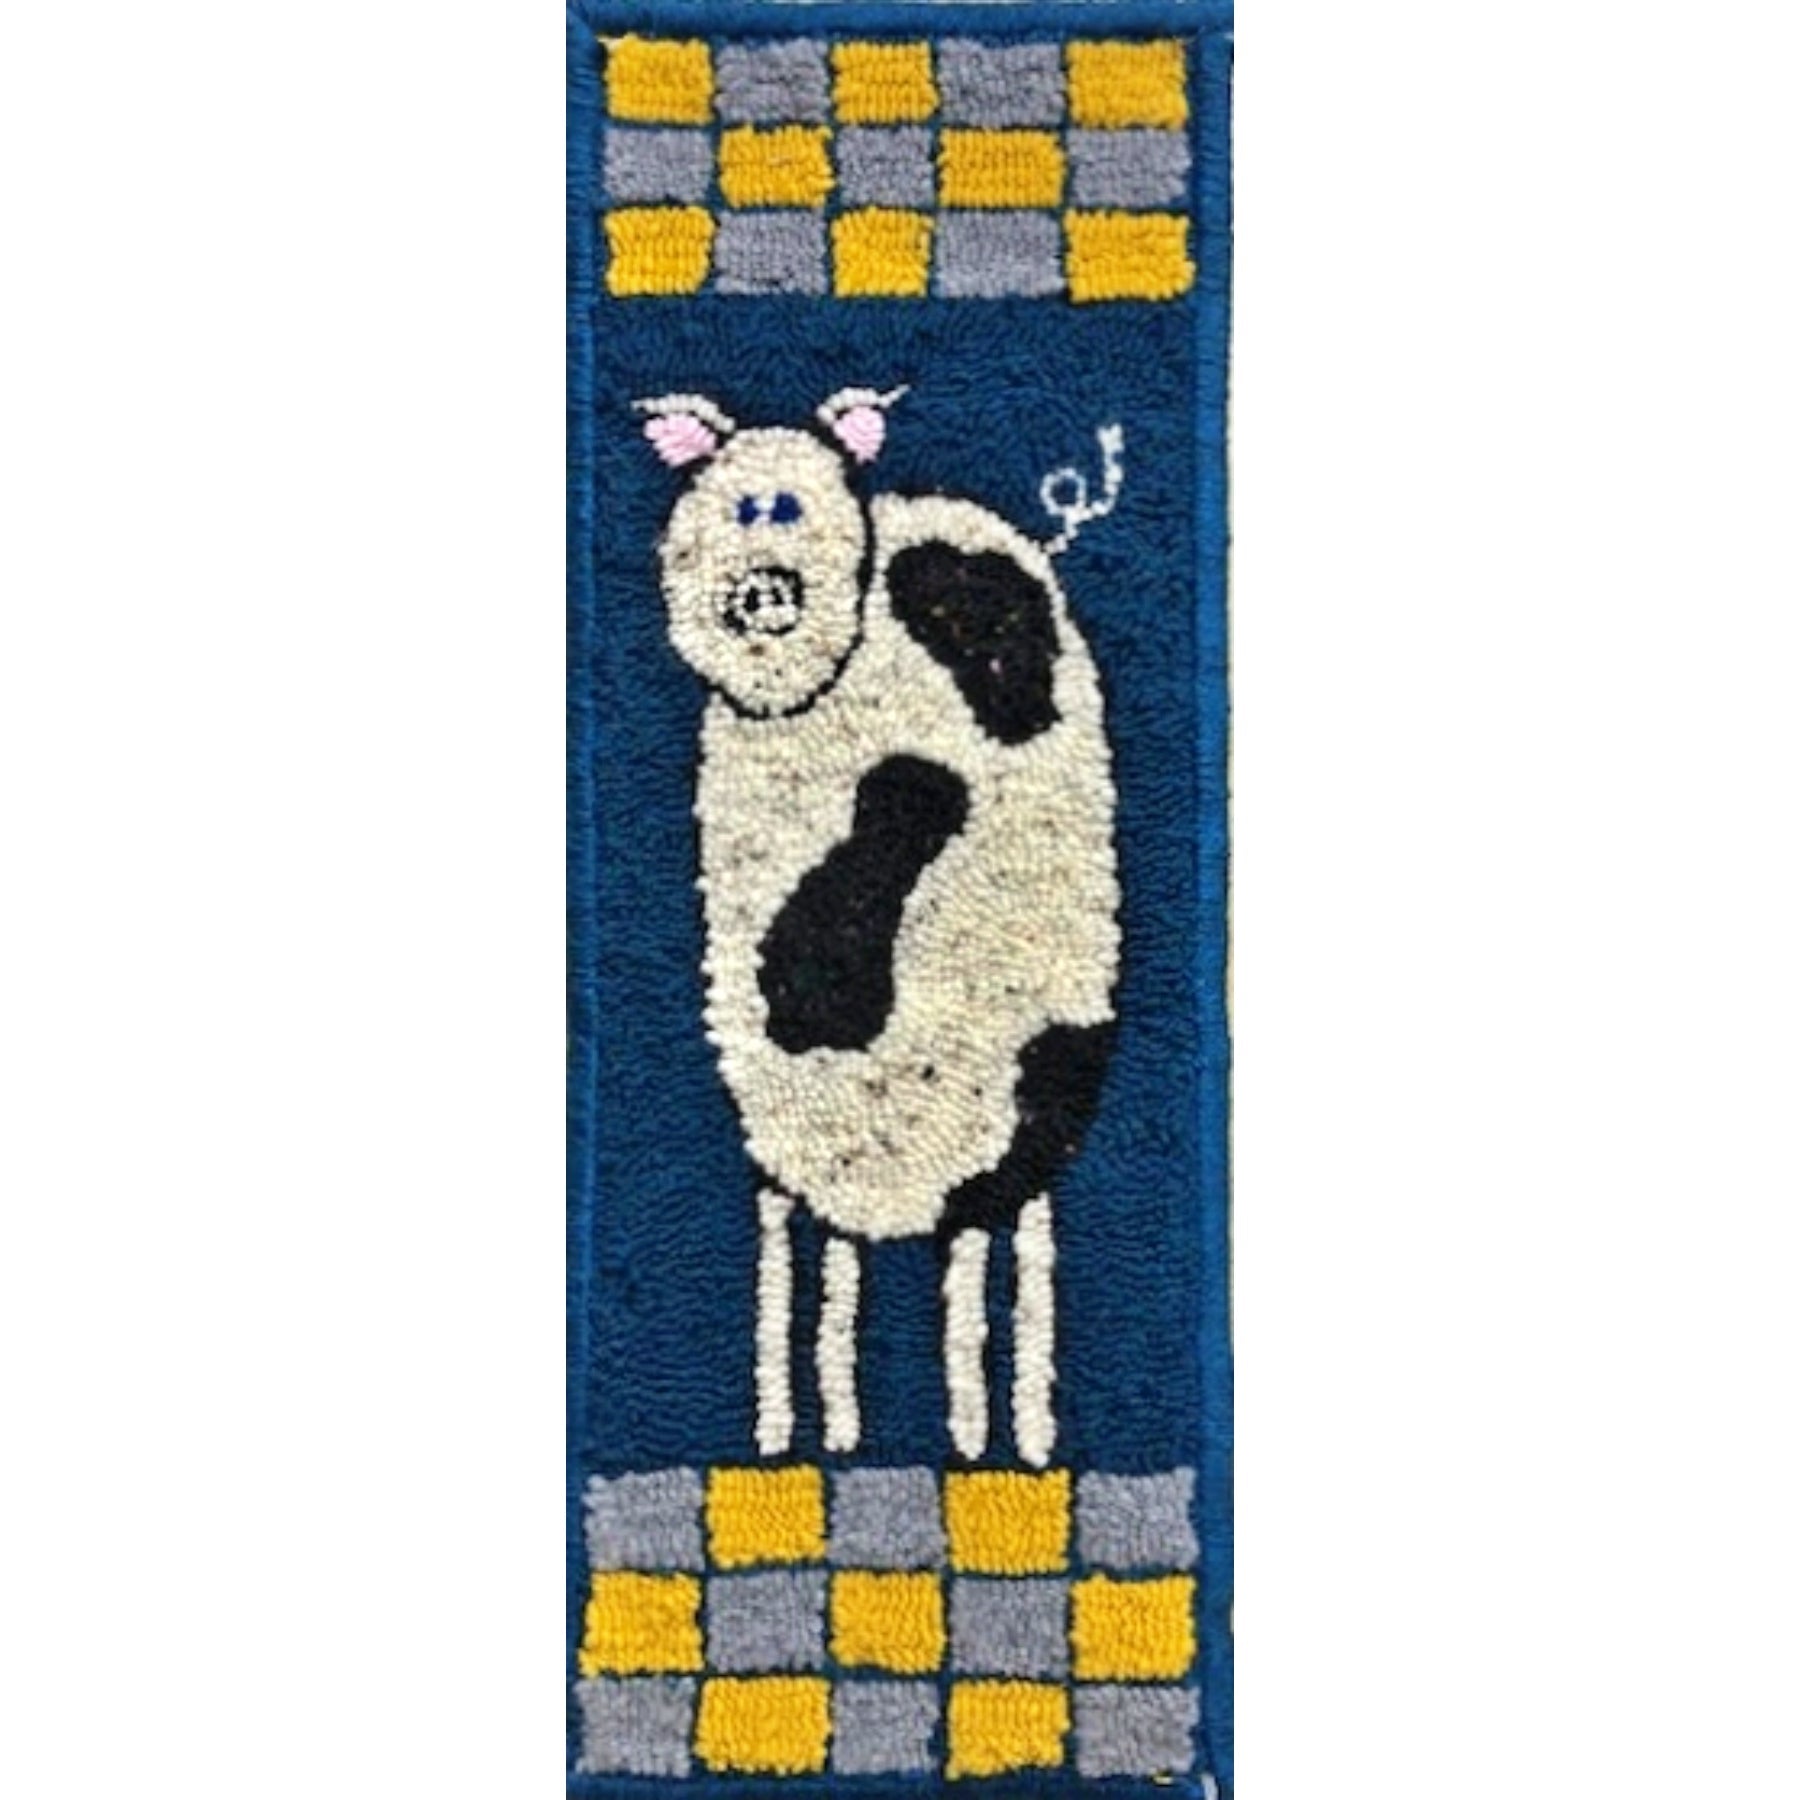 Oink, rug hooked by Jean Sherwood